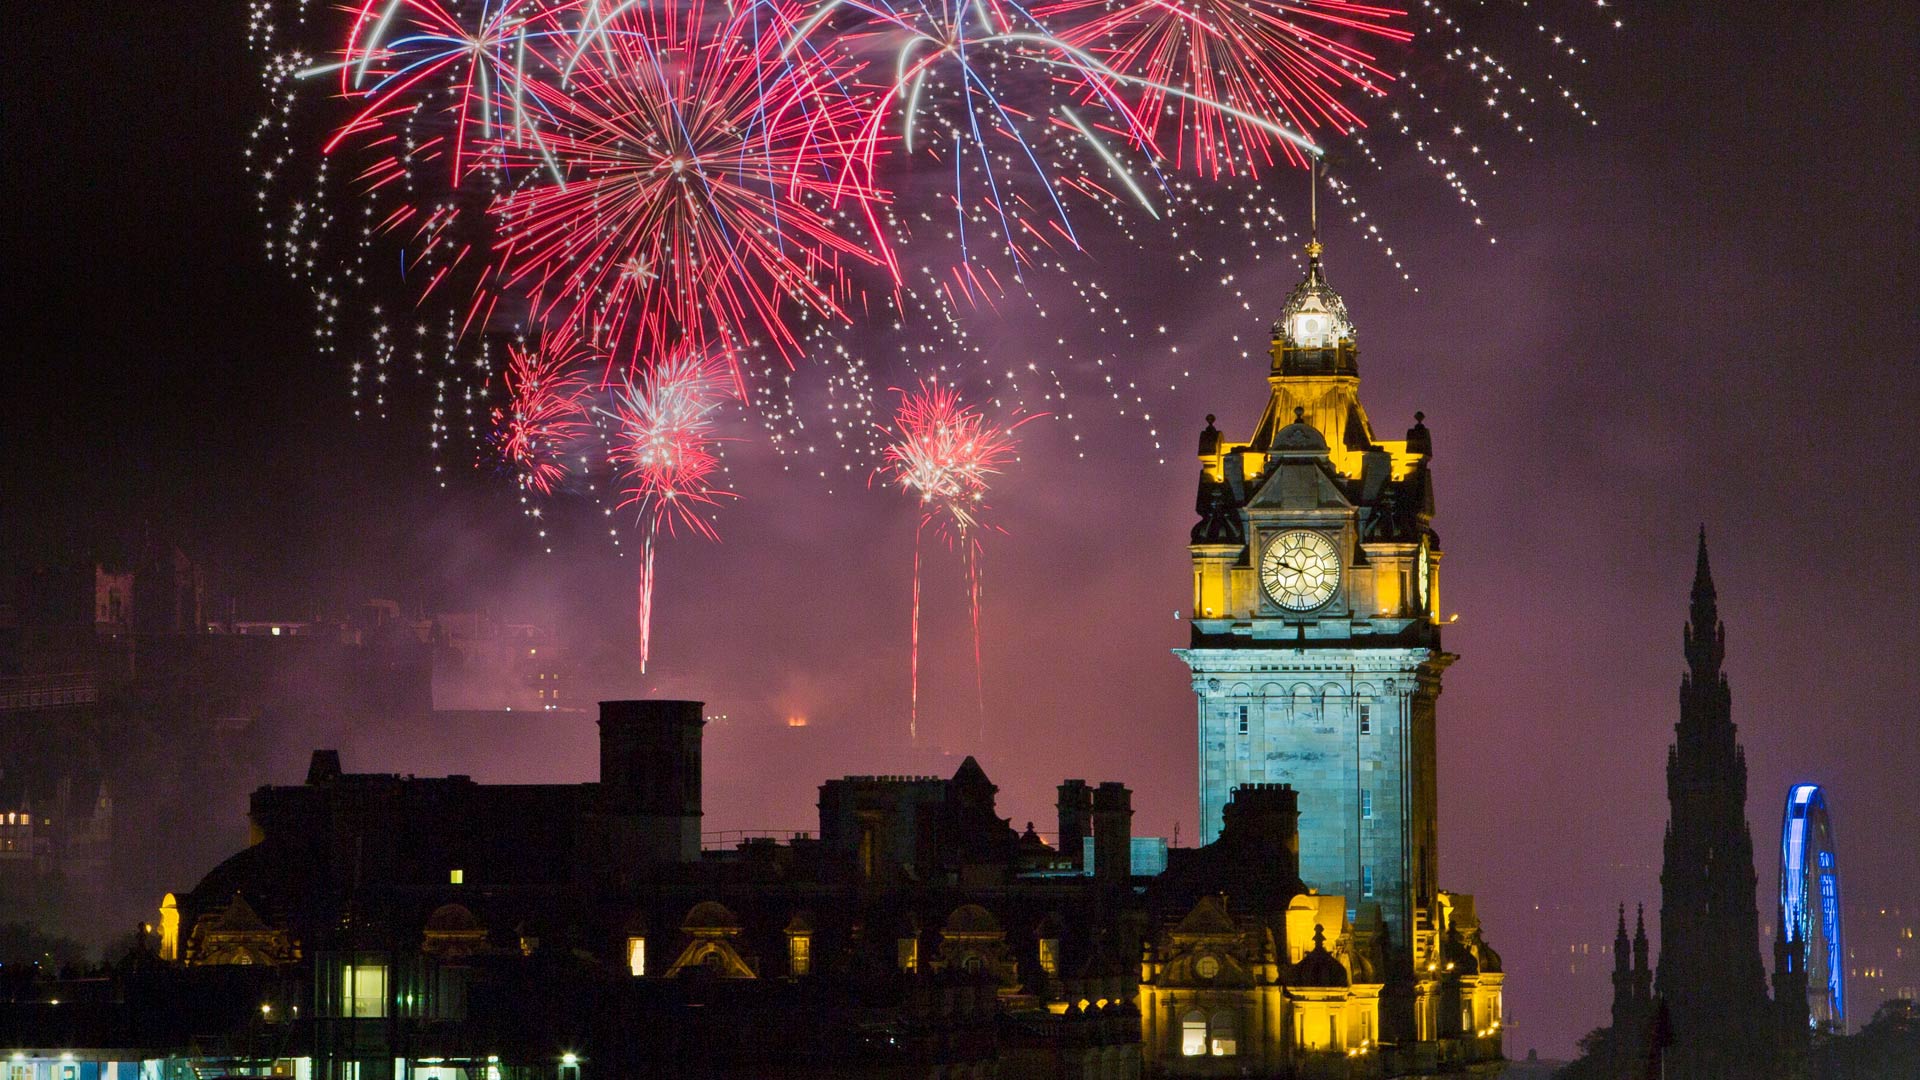 ‘Fringe’ takes center stage as Edinburgh celebrates the arts